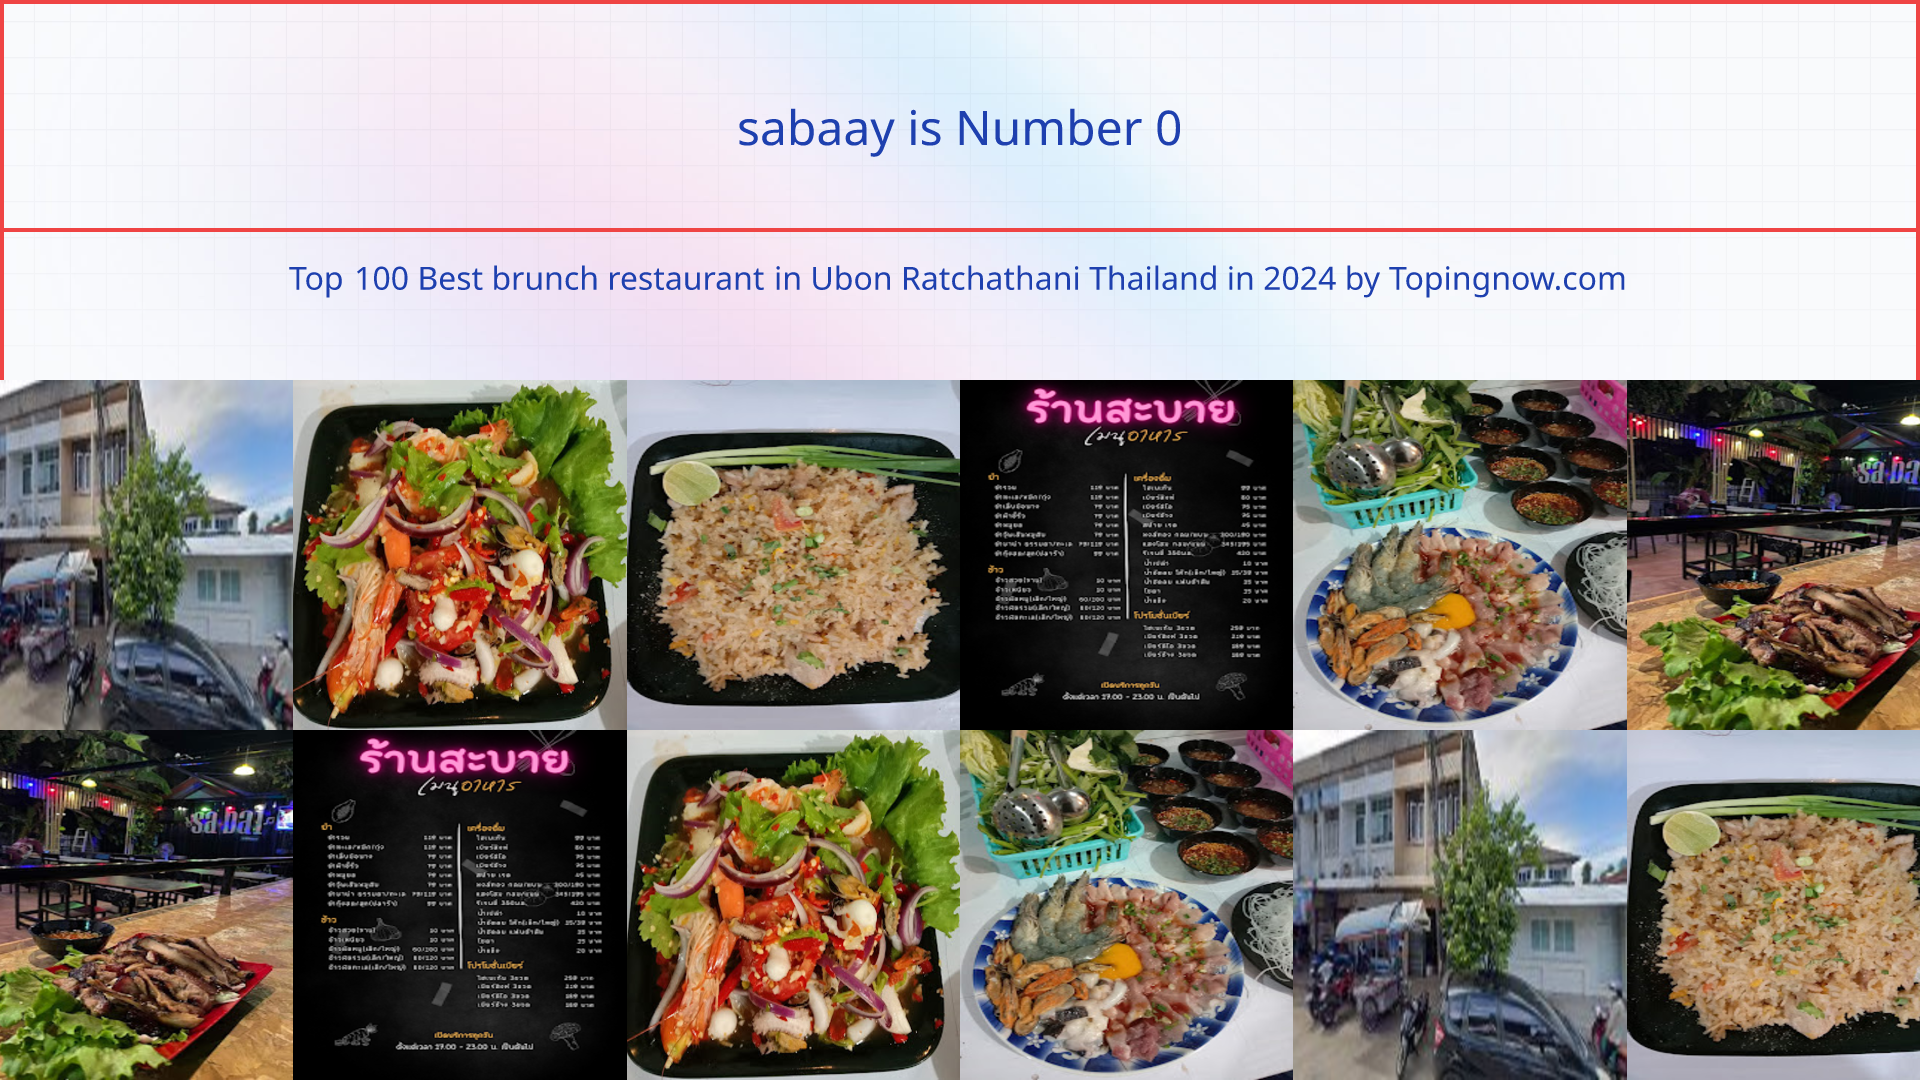 sabaay: Top 100 Best brunch restaurant in Ubon Ratchathani Thailand in 2024